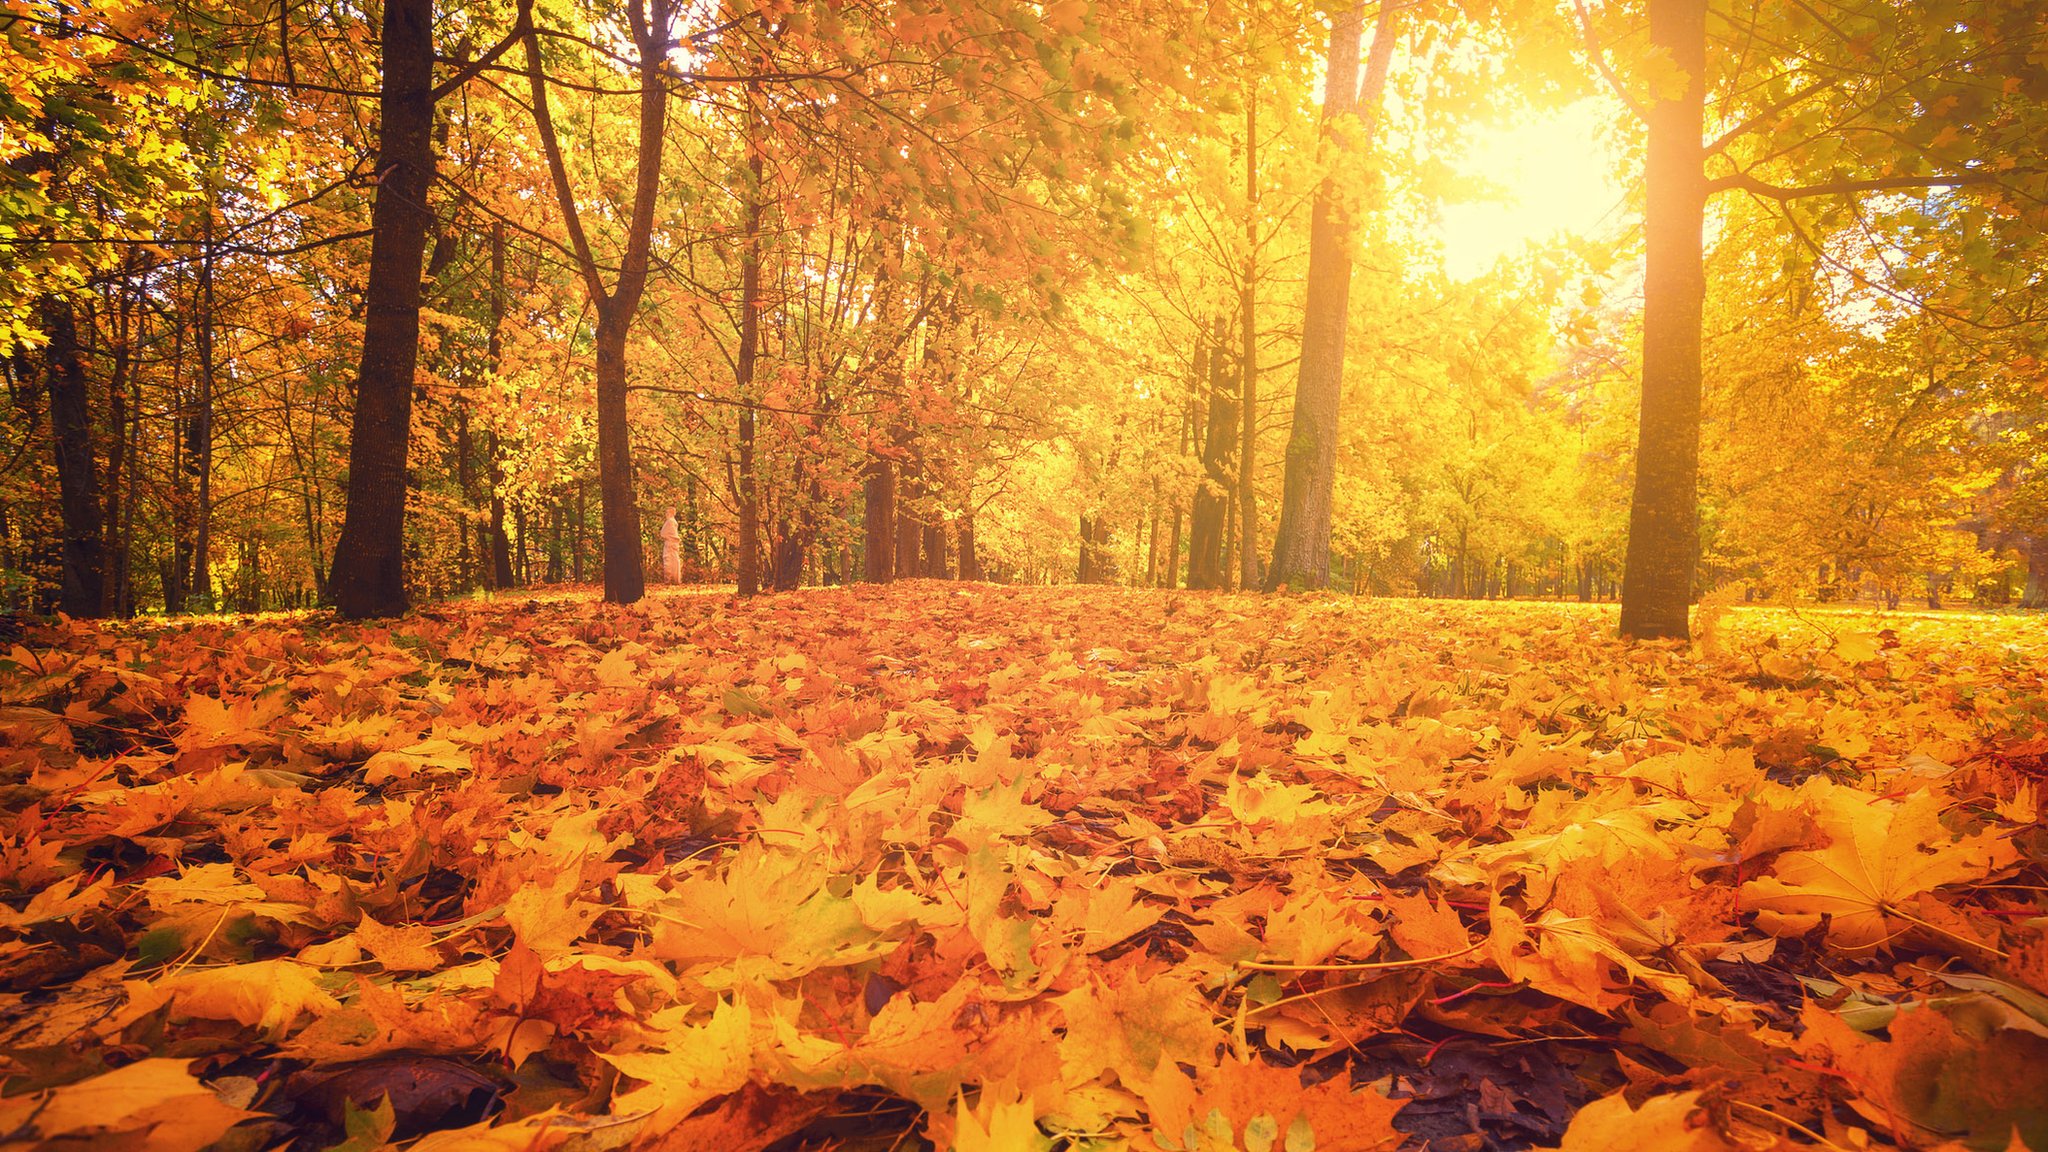 Autumn equinox: When does autumn begin?